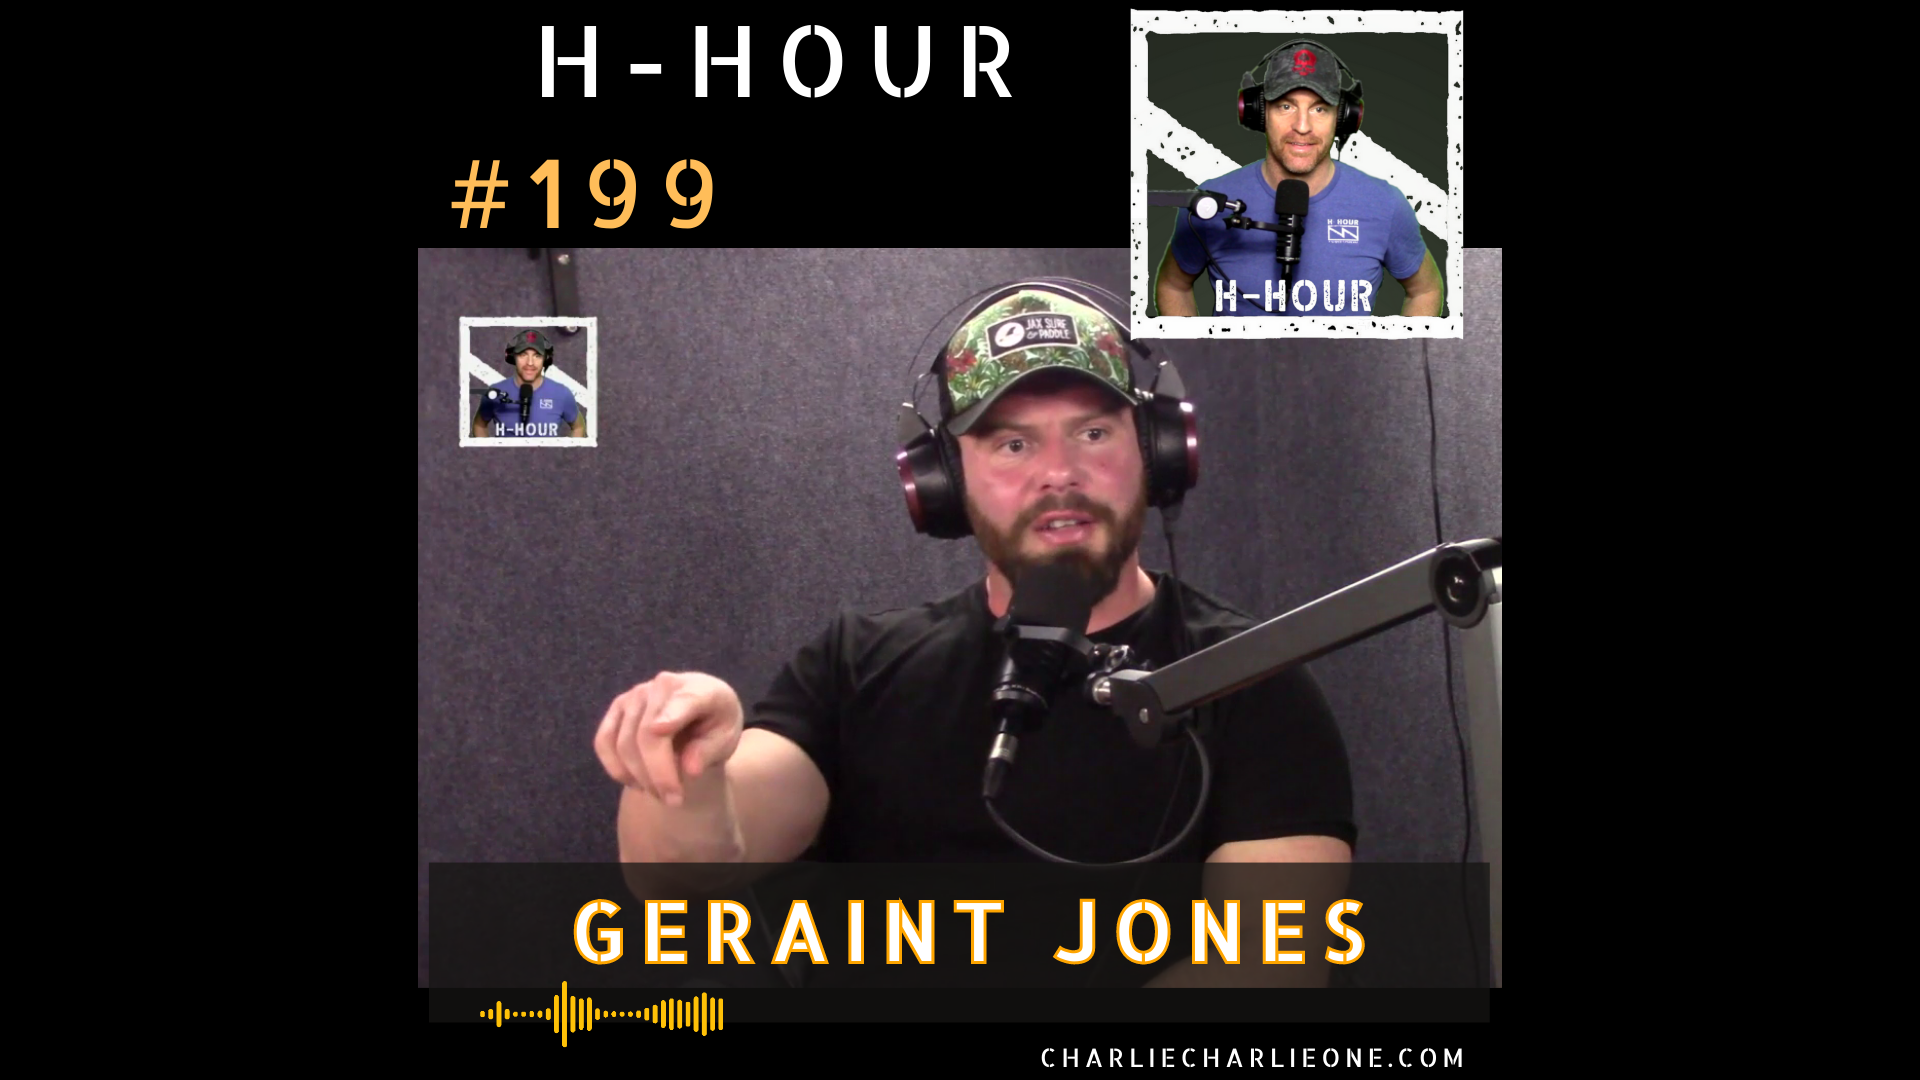 H-Hour cover image #199 geraint jones